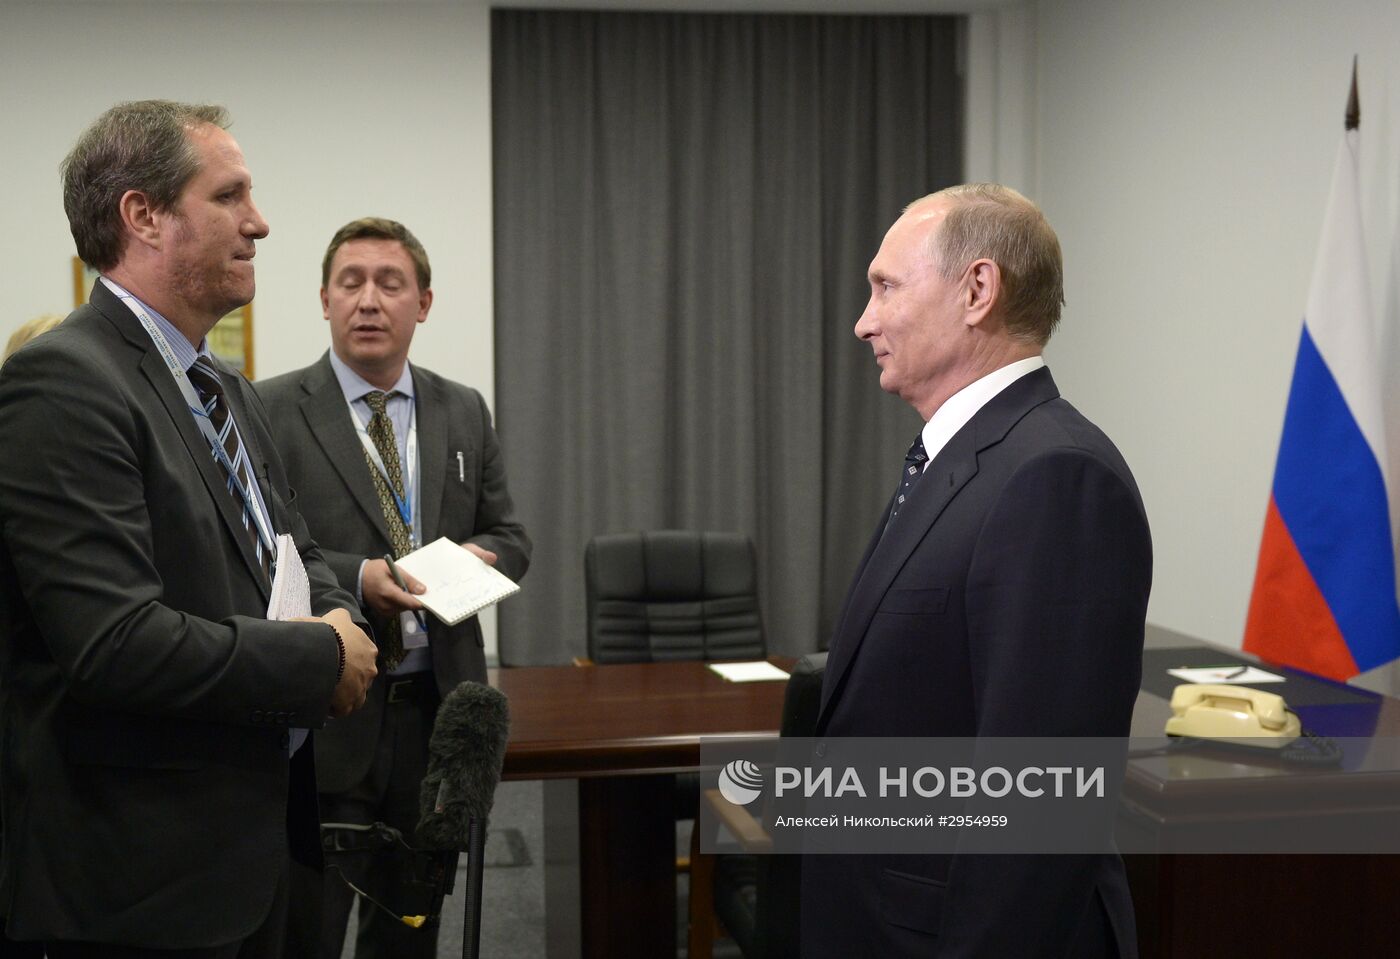 Президент РФ В. Путин дал интервью французским журналистам телеканала TF1